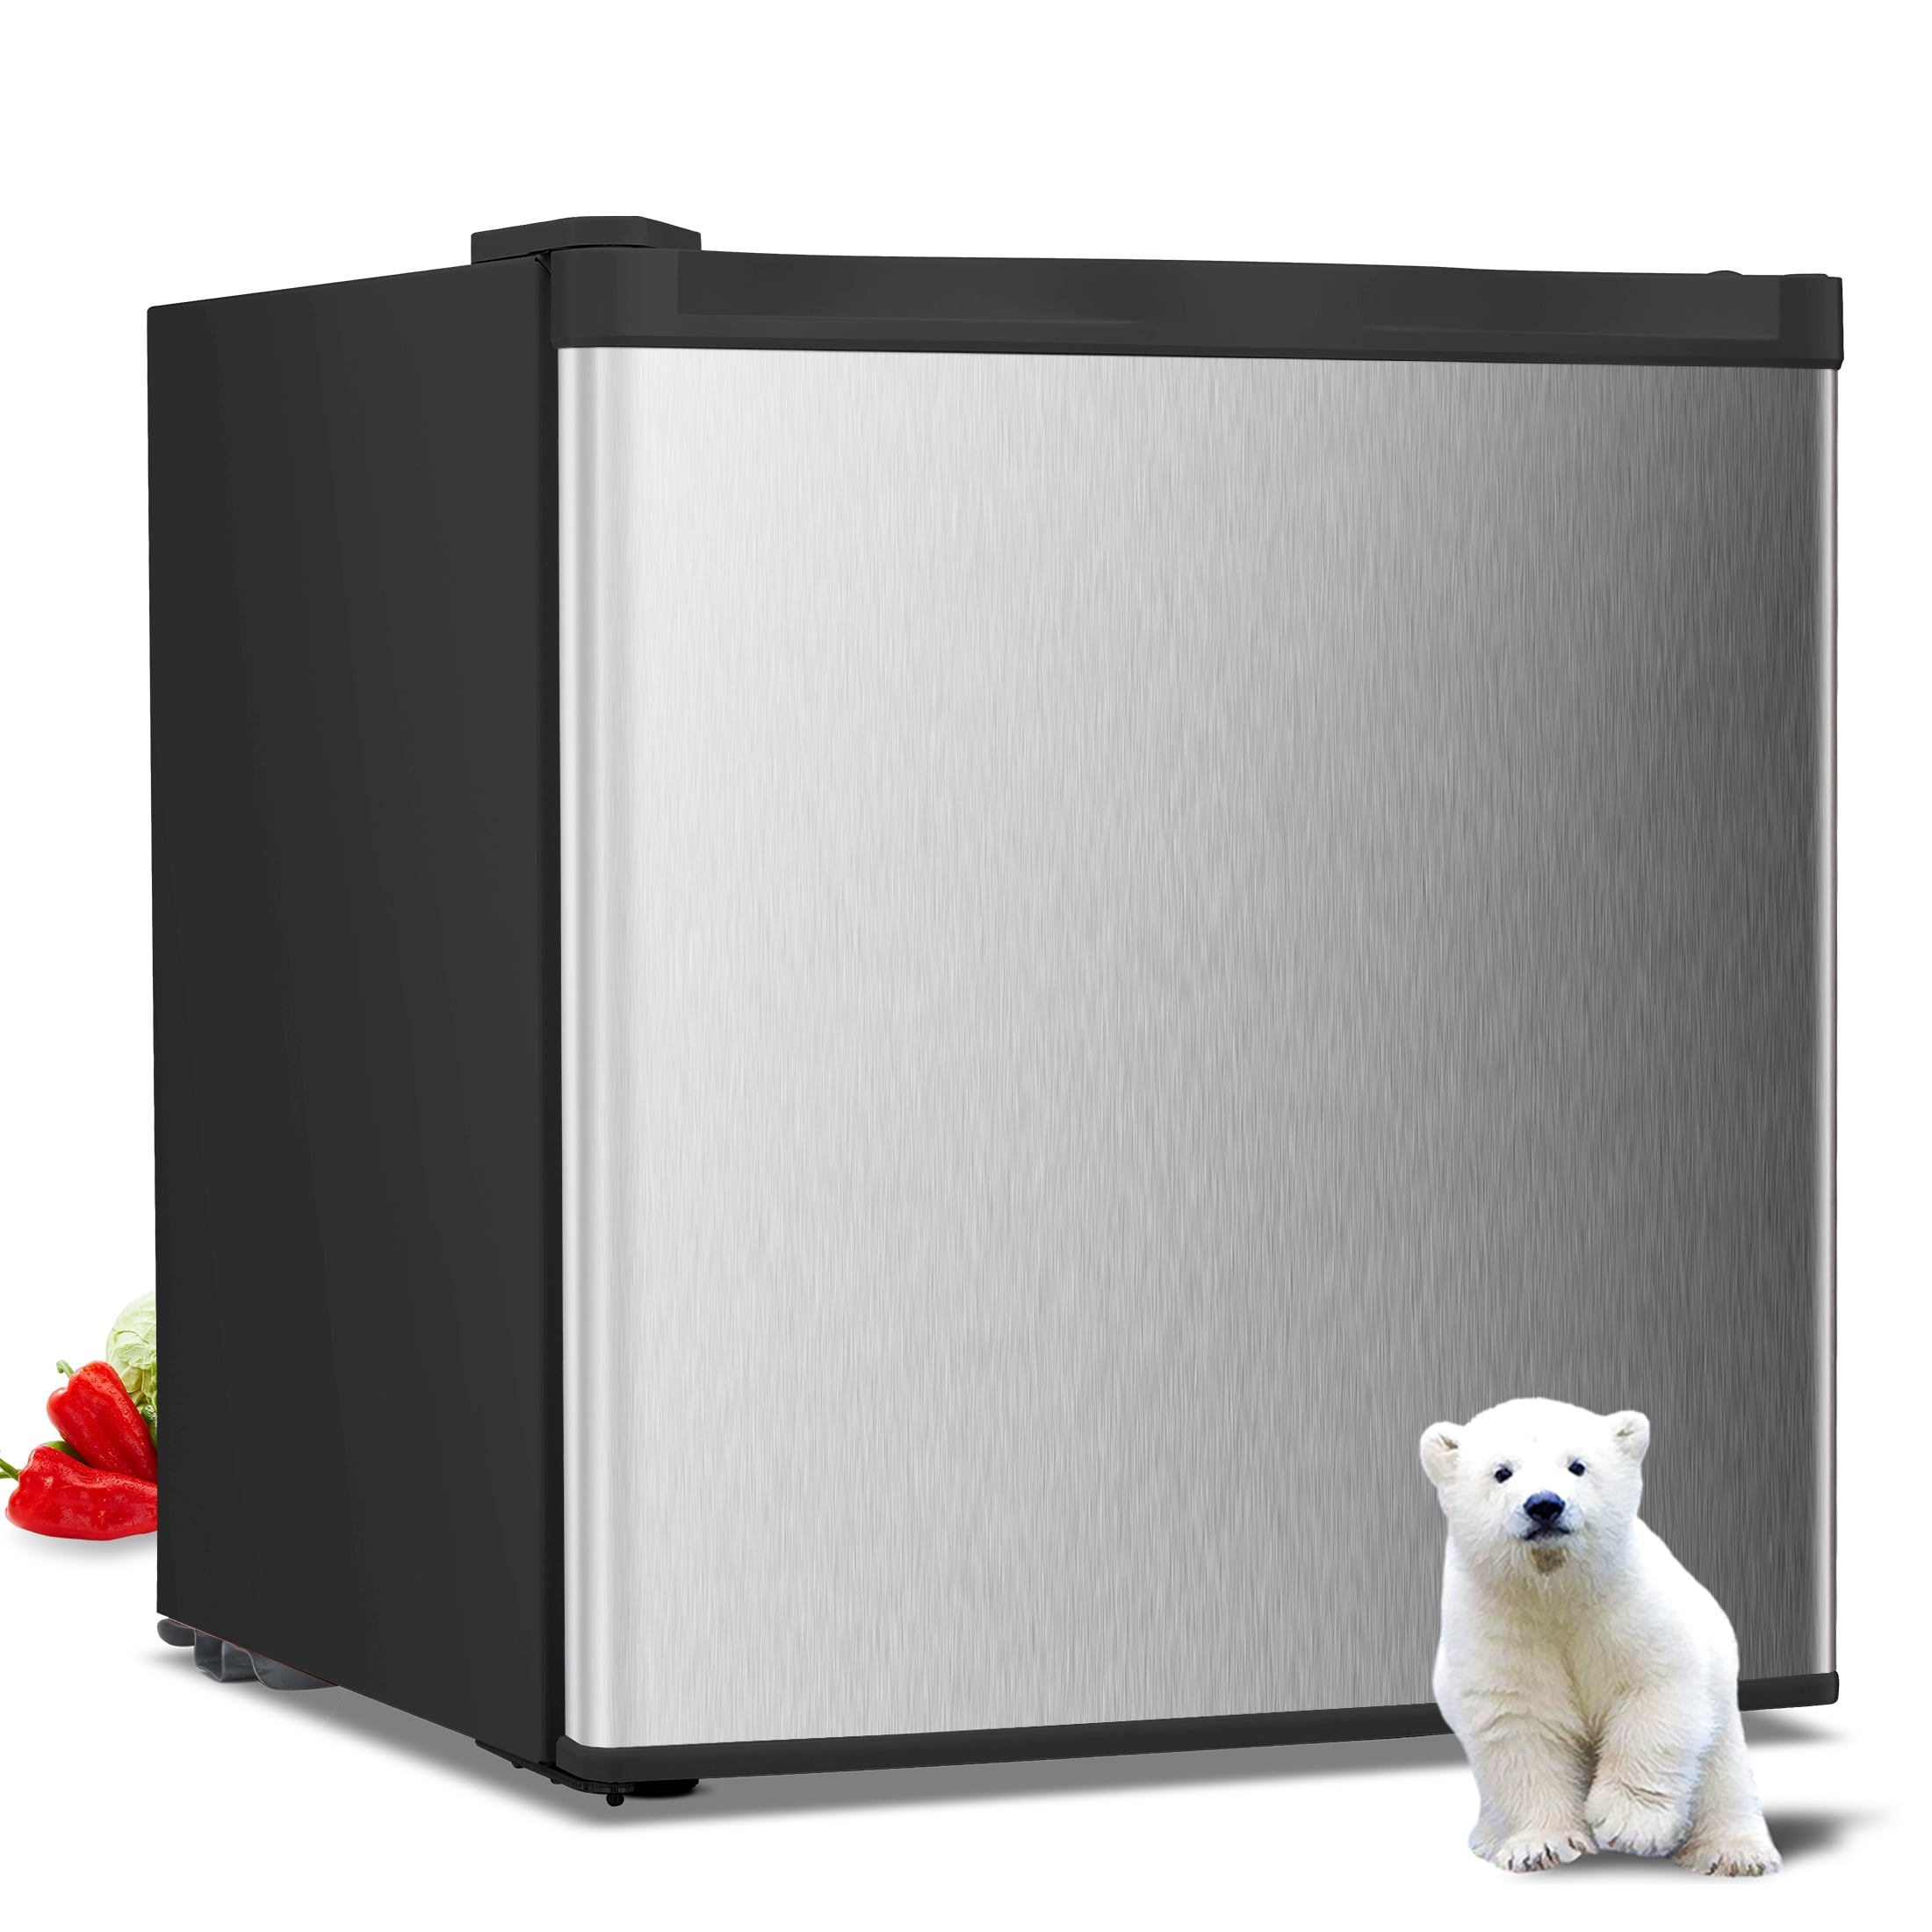 Arctic King 3.5 Cu Ft Chest Freezer, Deep Freezer, Refrigerador Domestico,  White - AliExpress